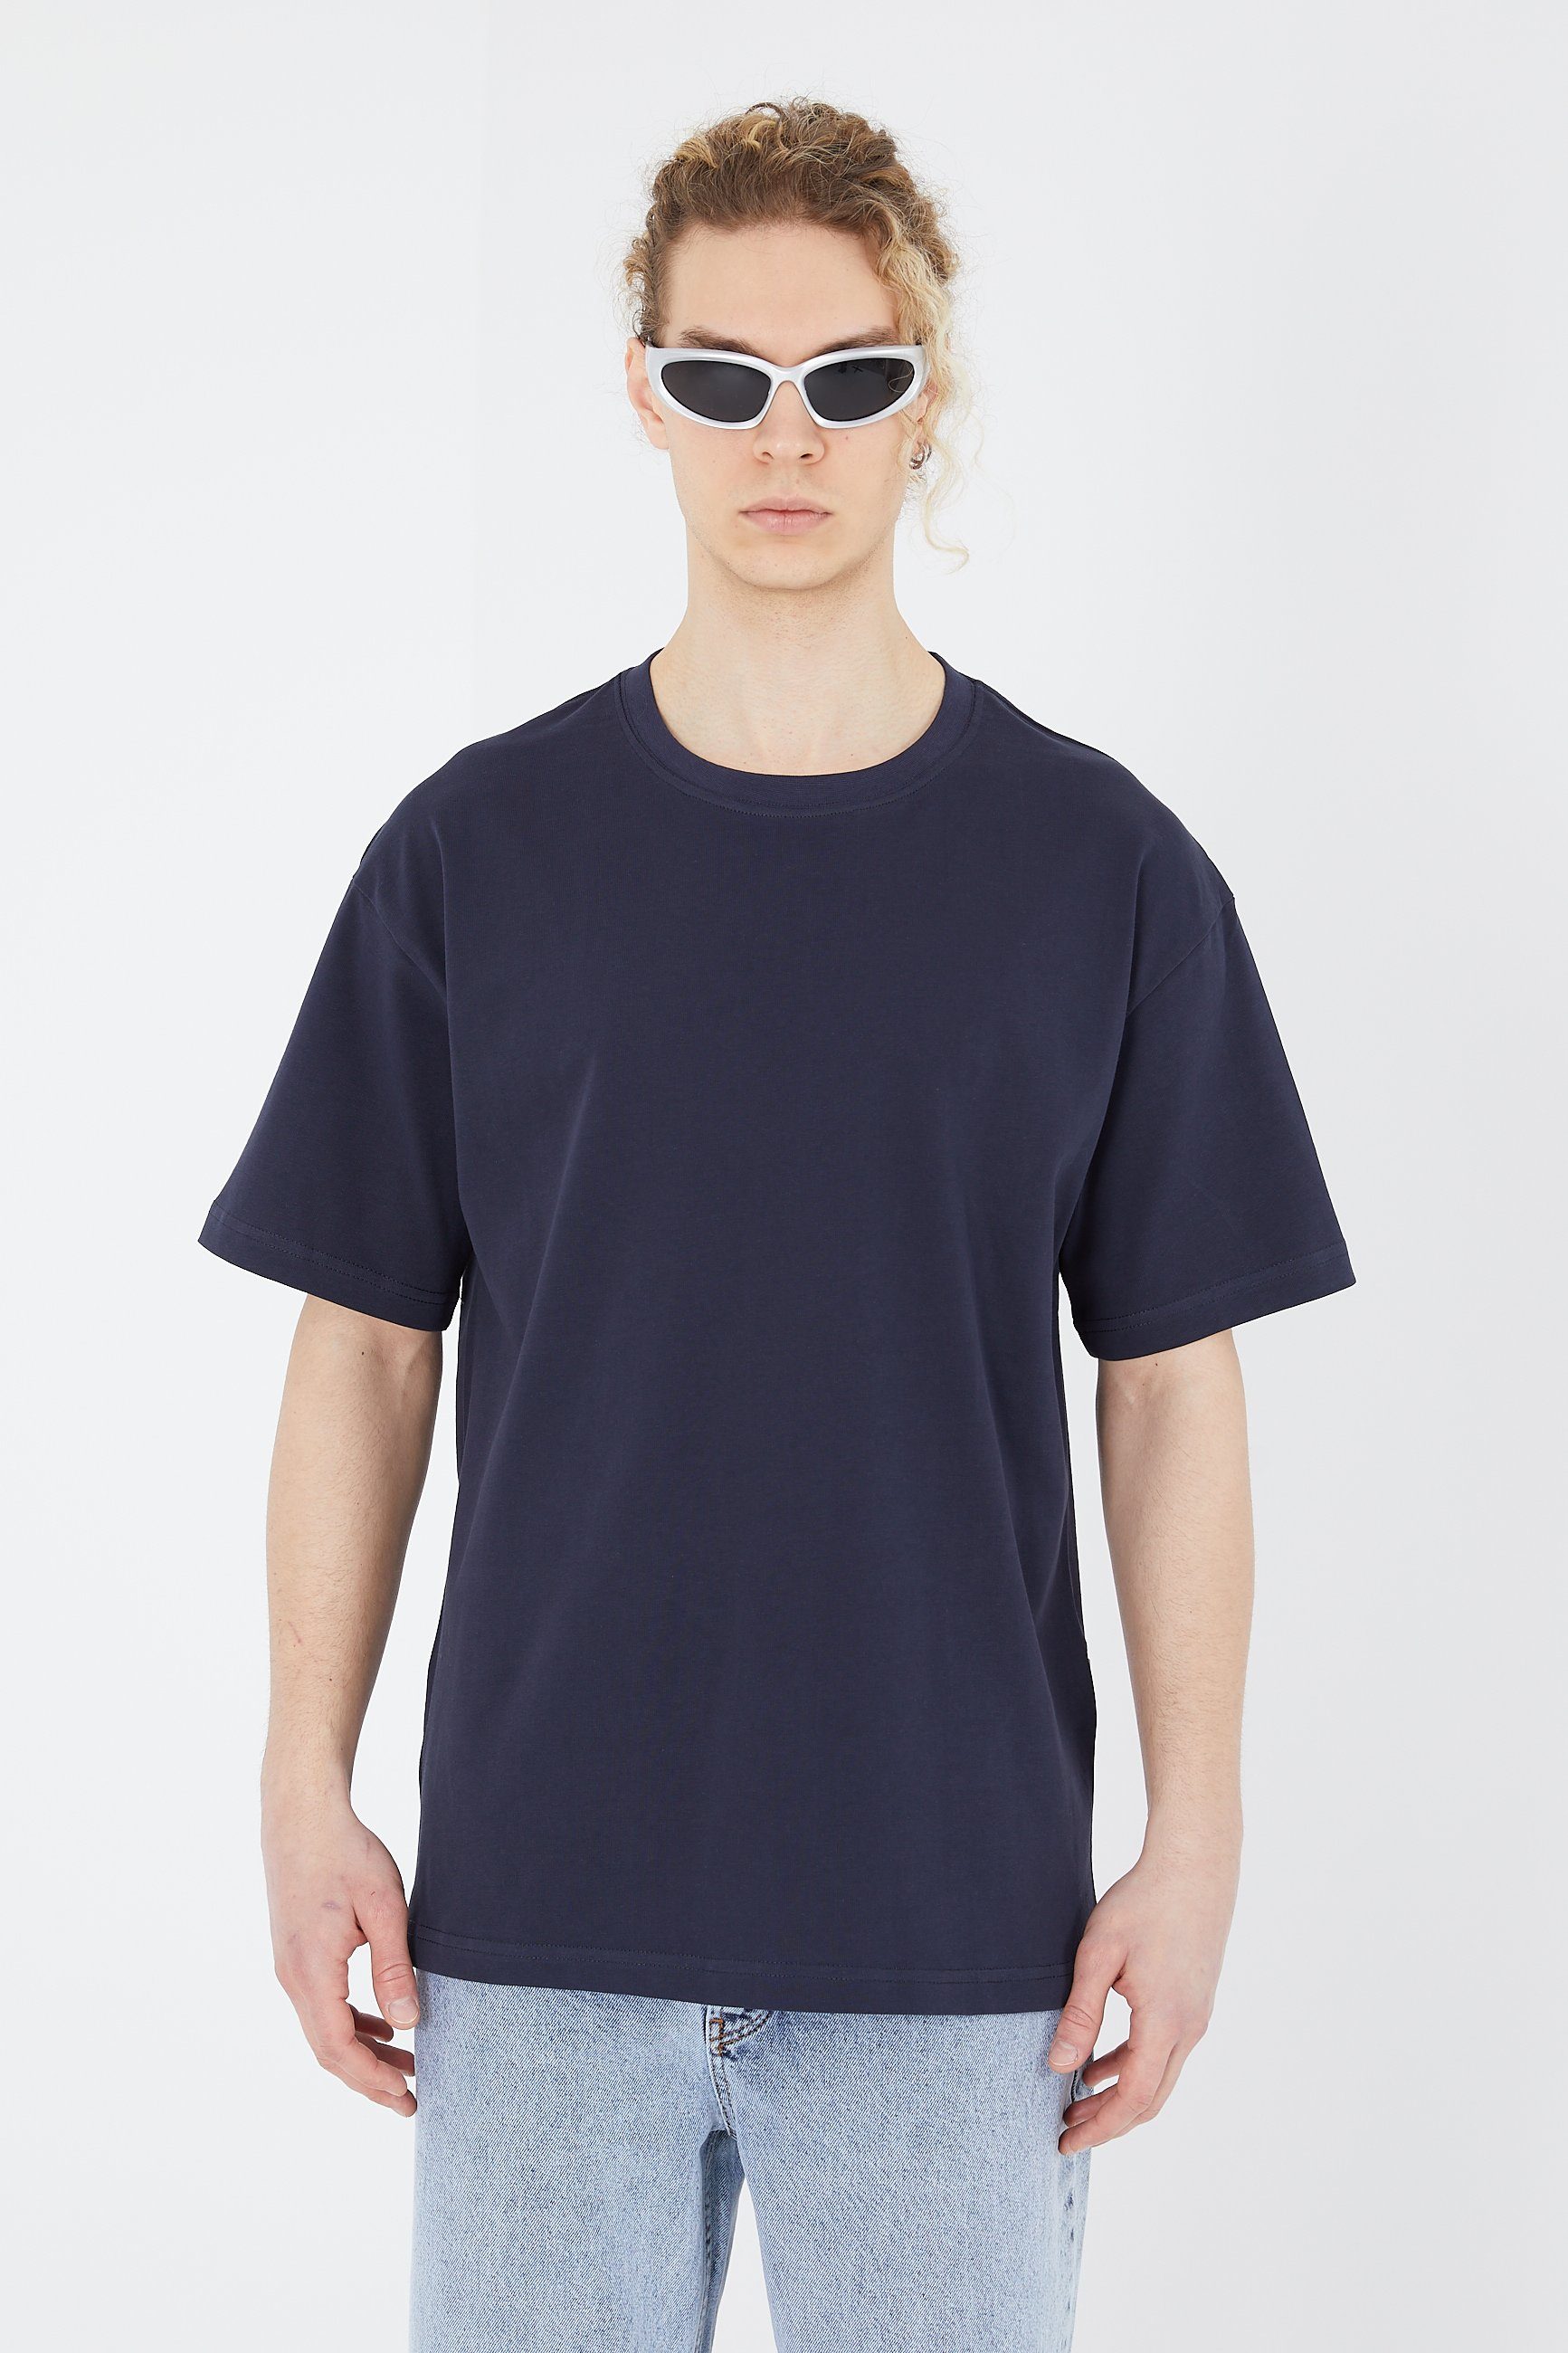 COFI Casuals T-Shirt einfarbiges Basic Oversized T-Shirt mit 320 GSM Baumwolle